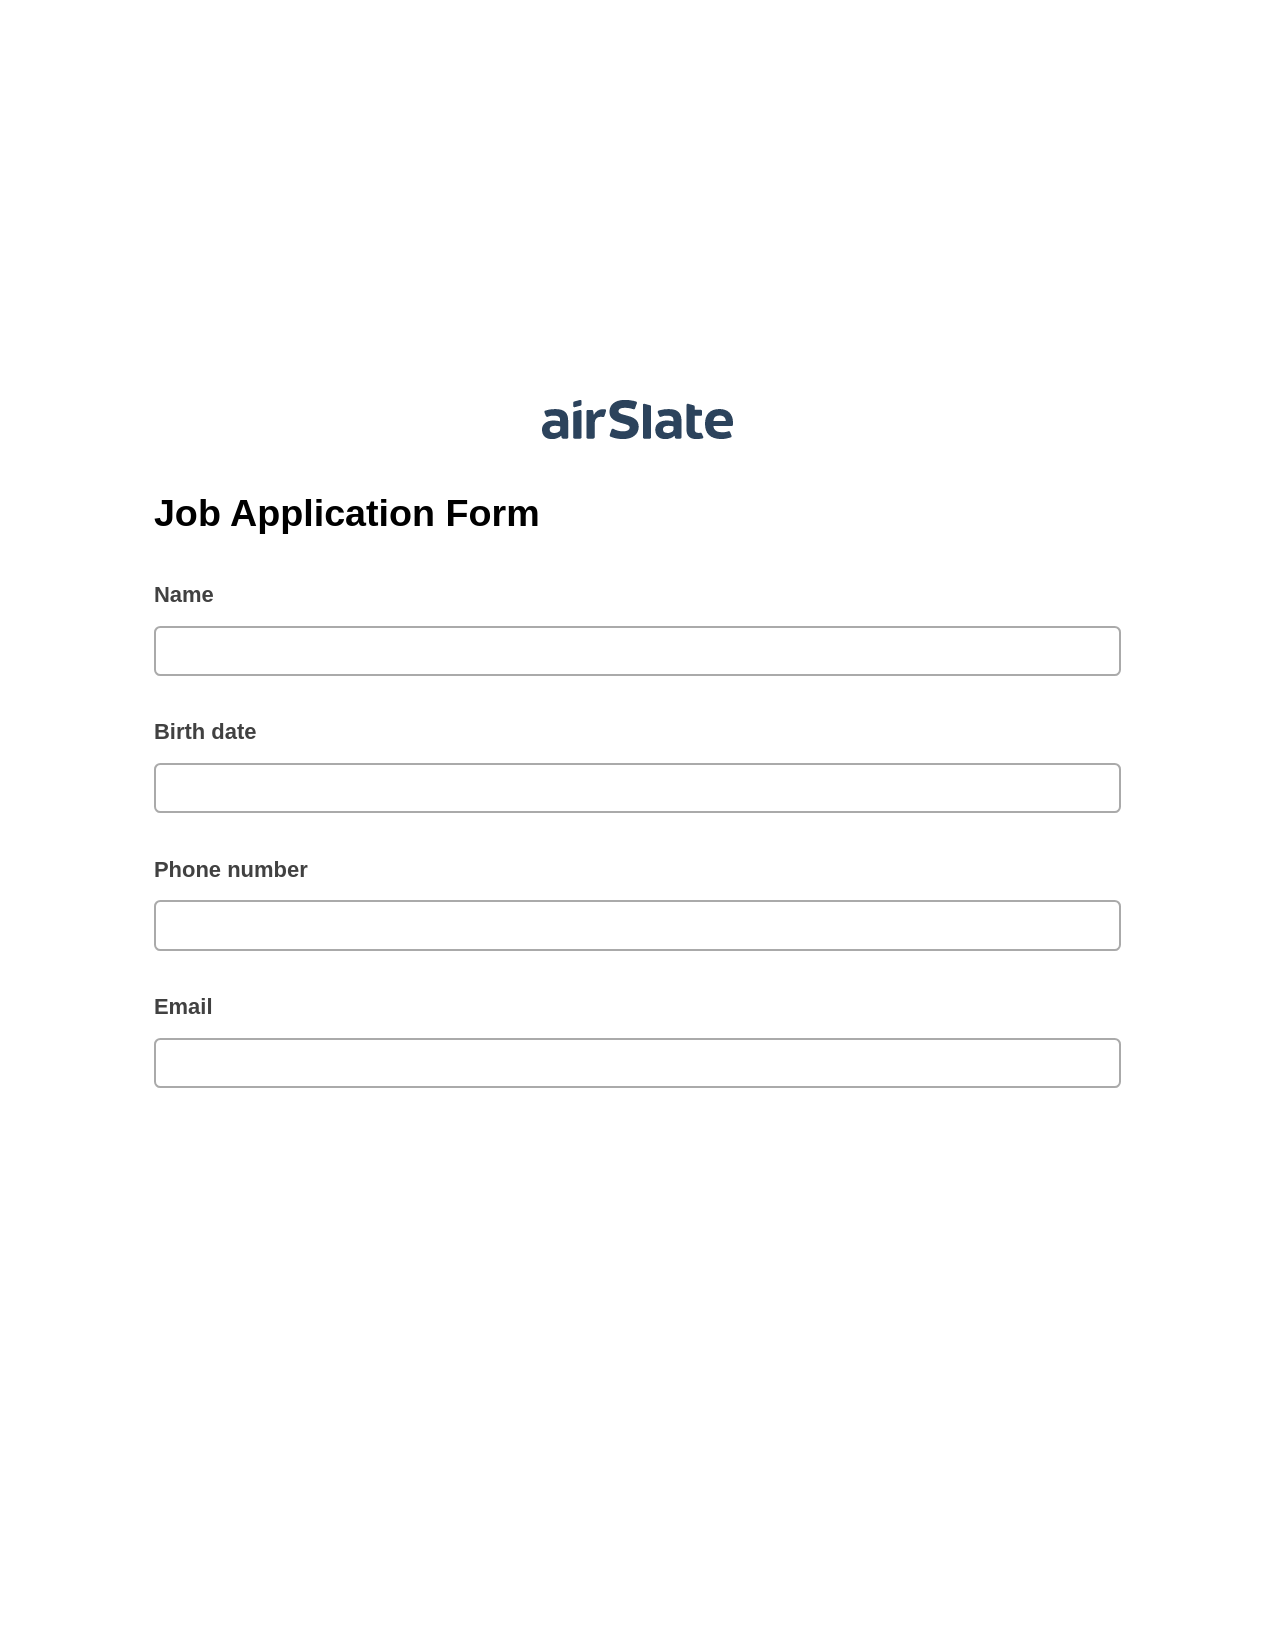 Multirole Job Application Form Pre-fill from Office 365 Excel Bot, Revoke Access Bot, Google Drive Bot